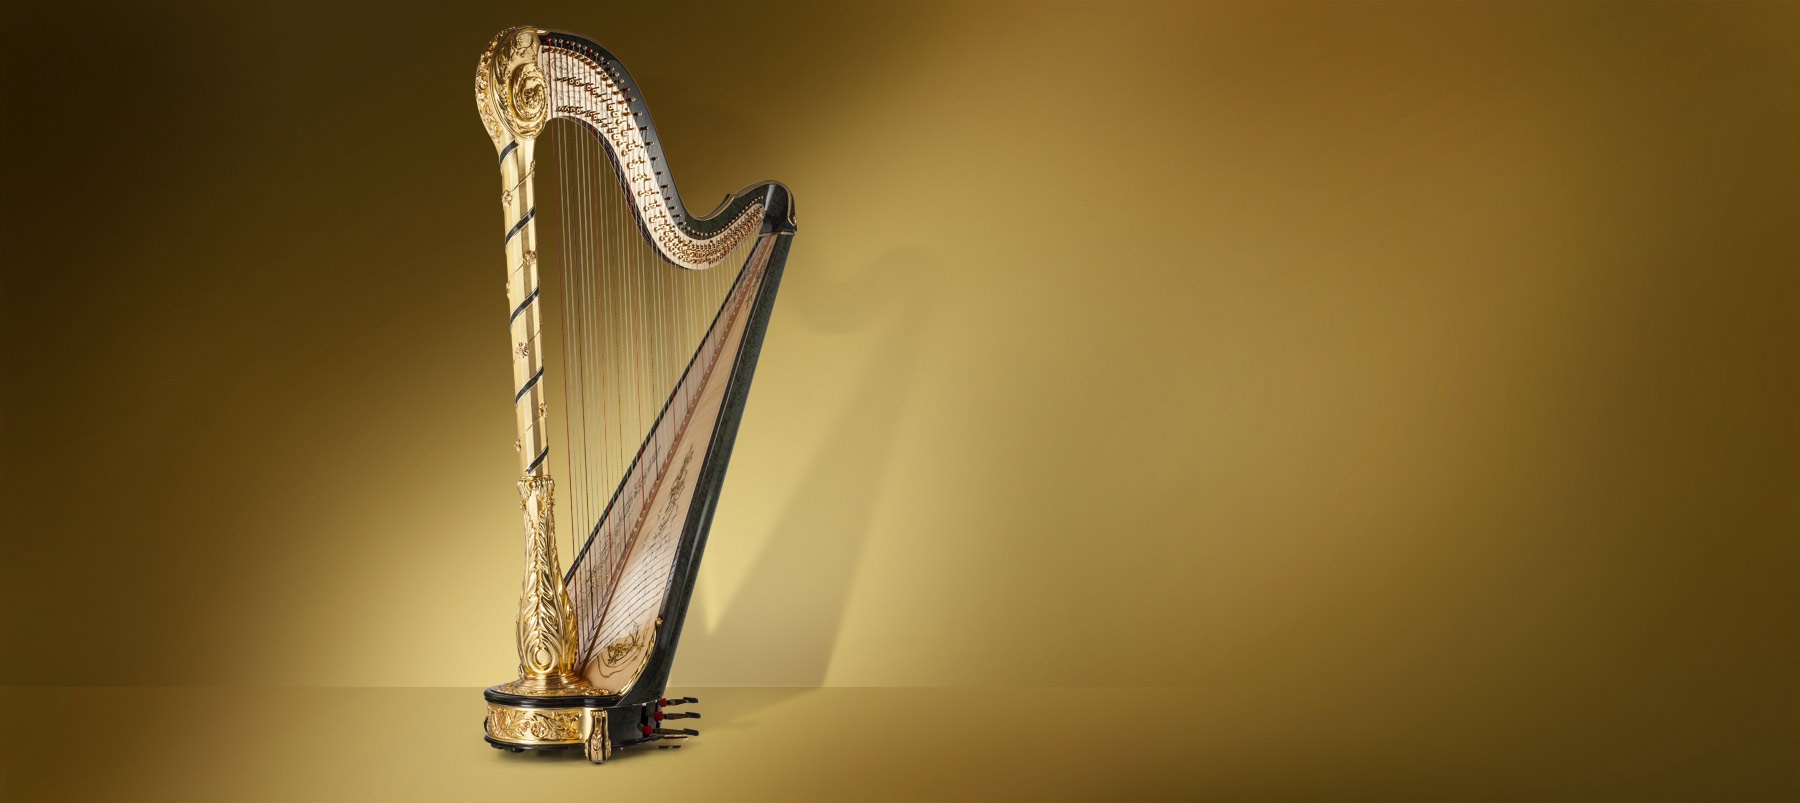 Detail Images Of Harp Nomer 52